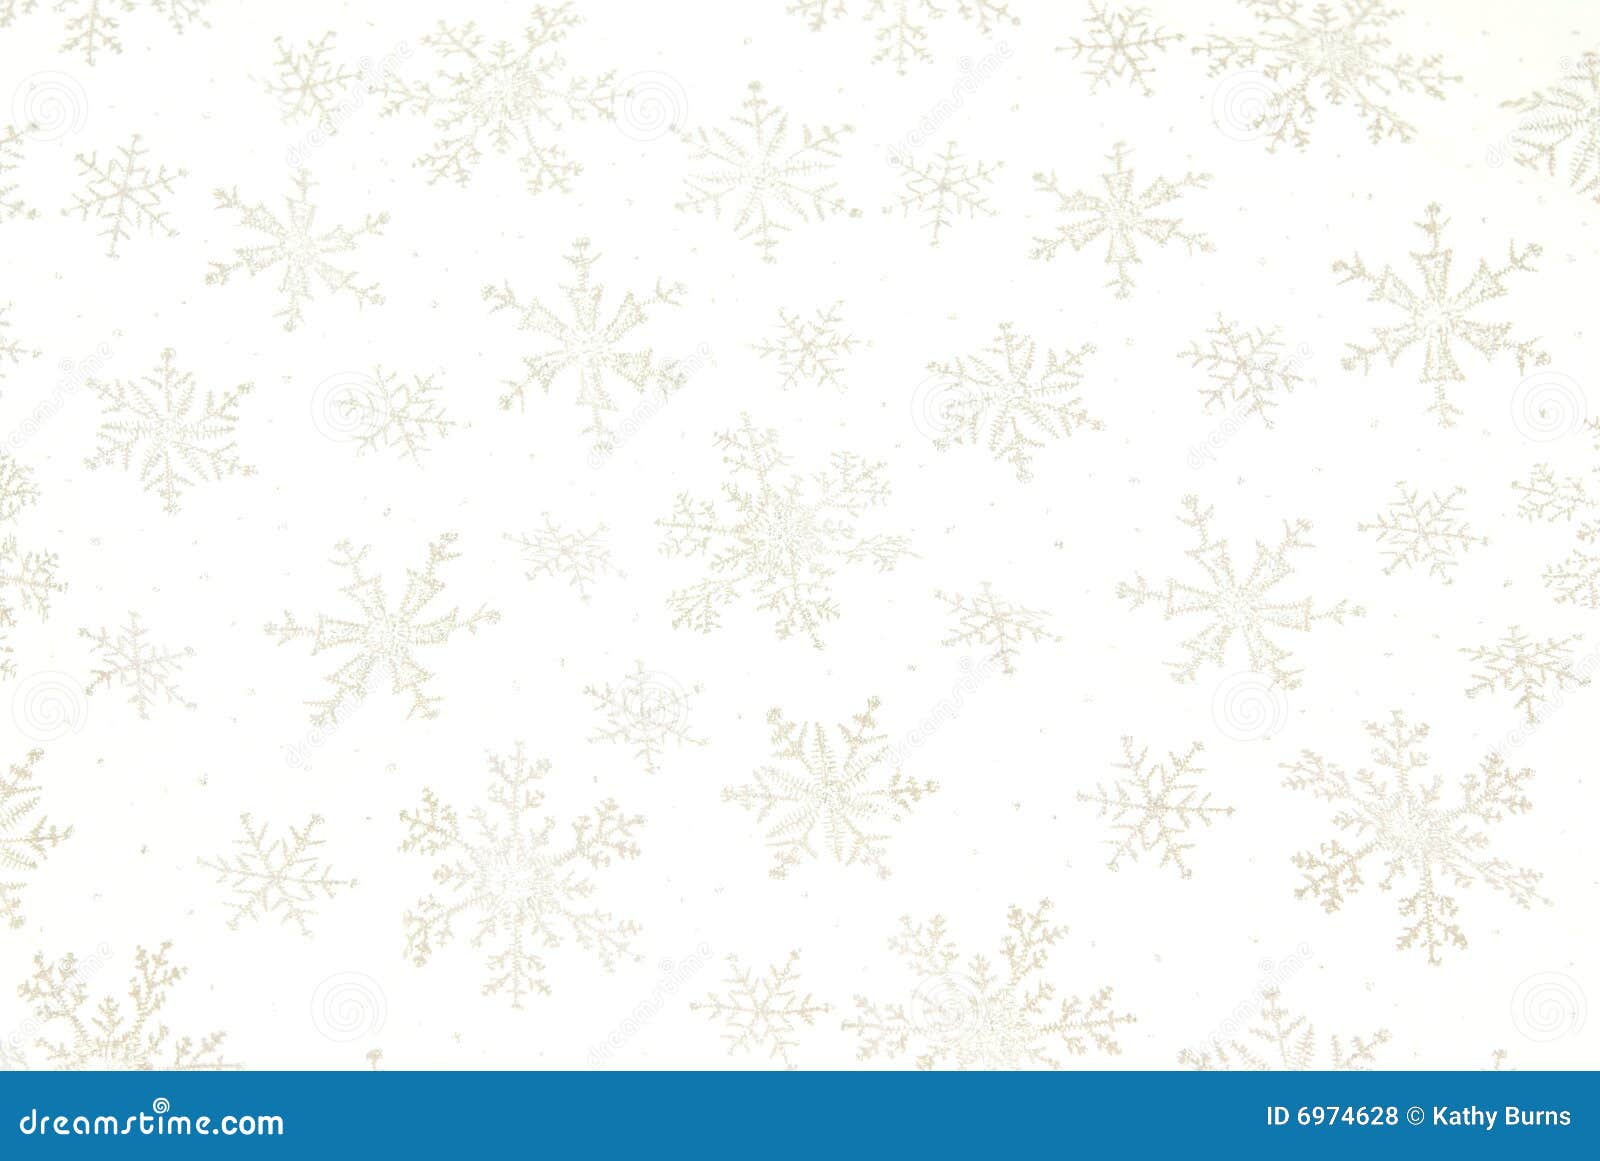 Snowflake Background Royalty Free Stock Photos - Image: 6974628